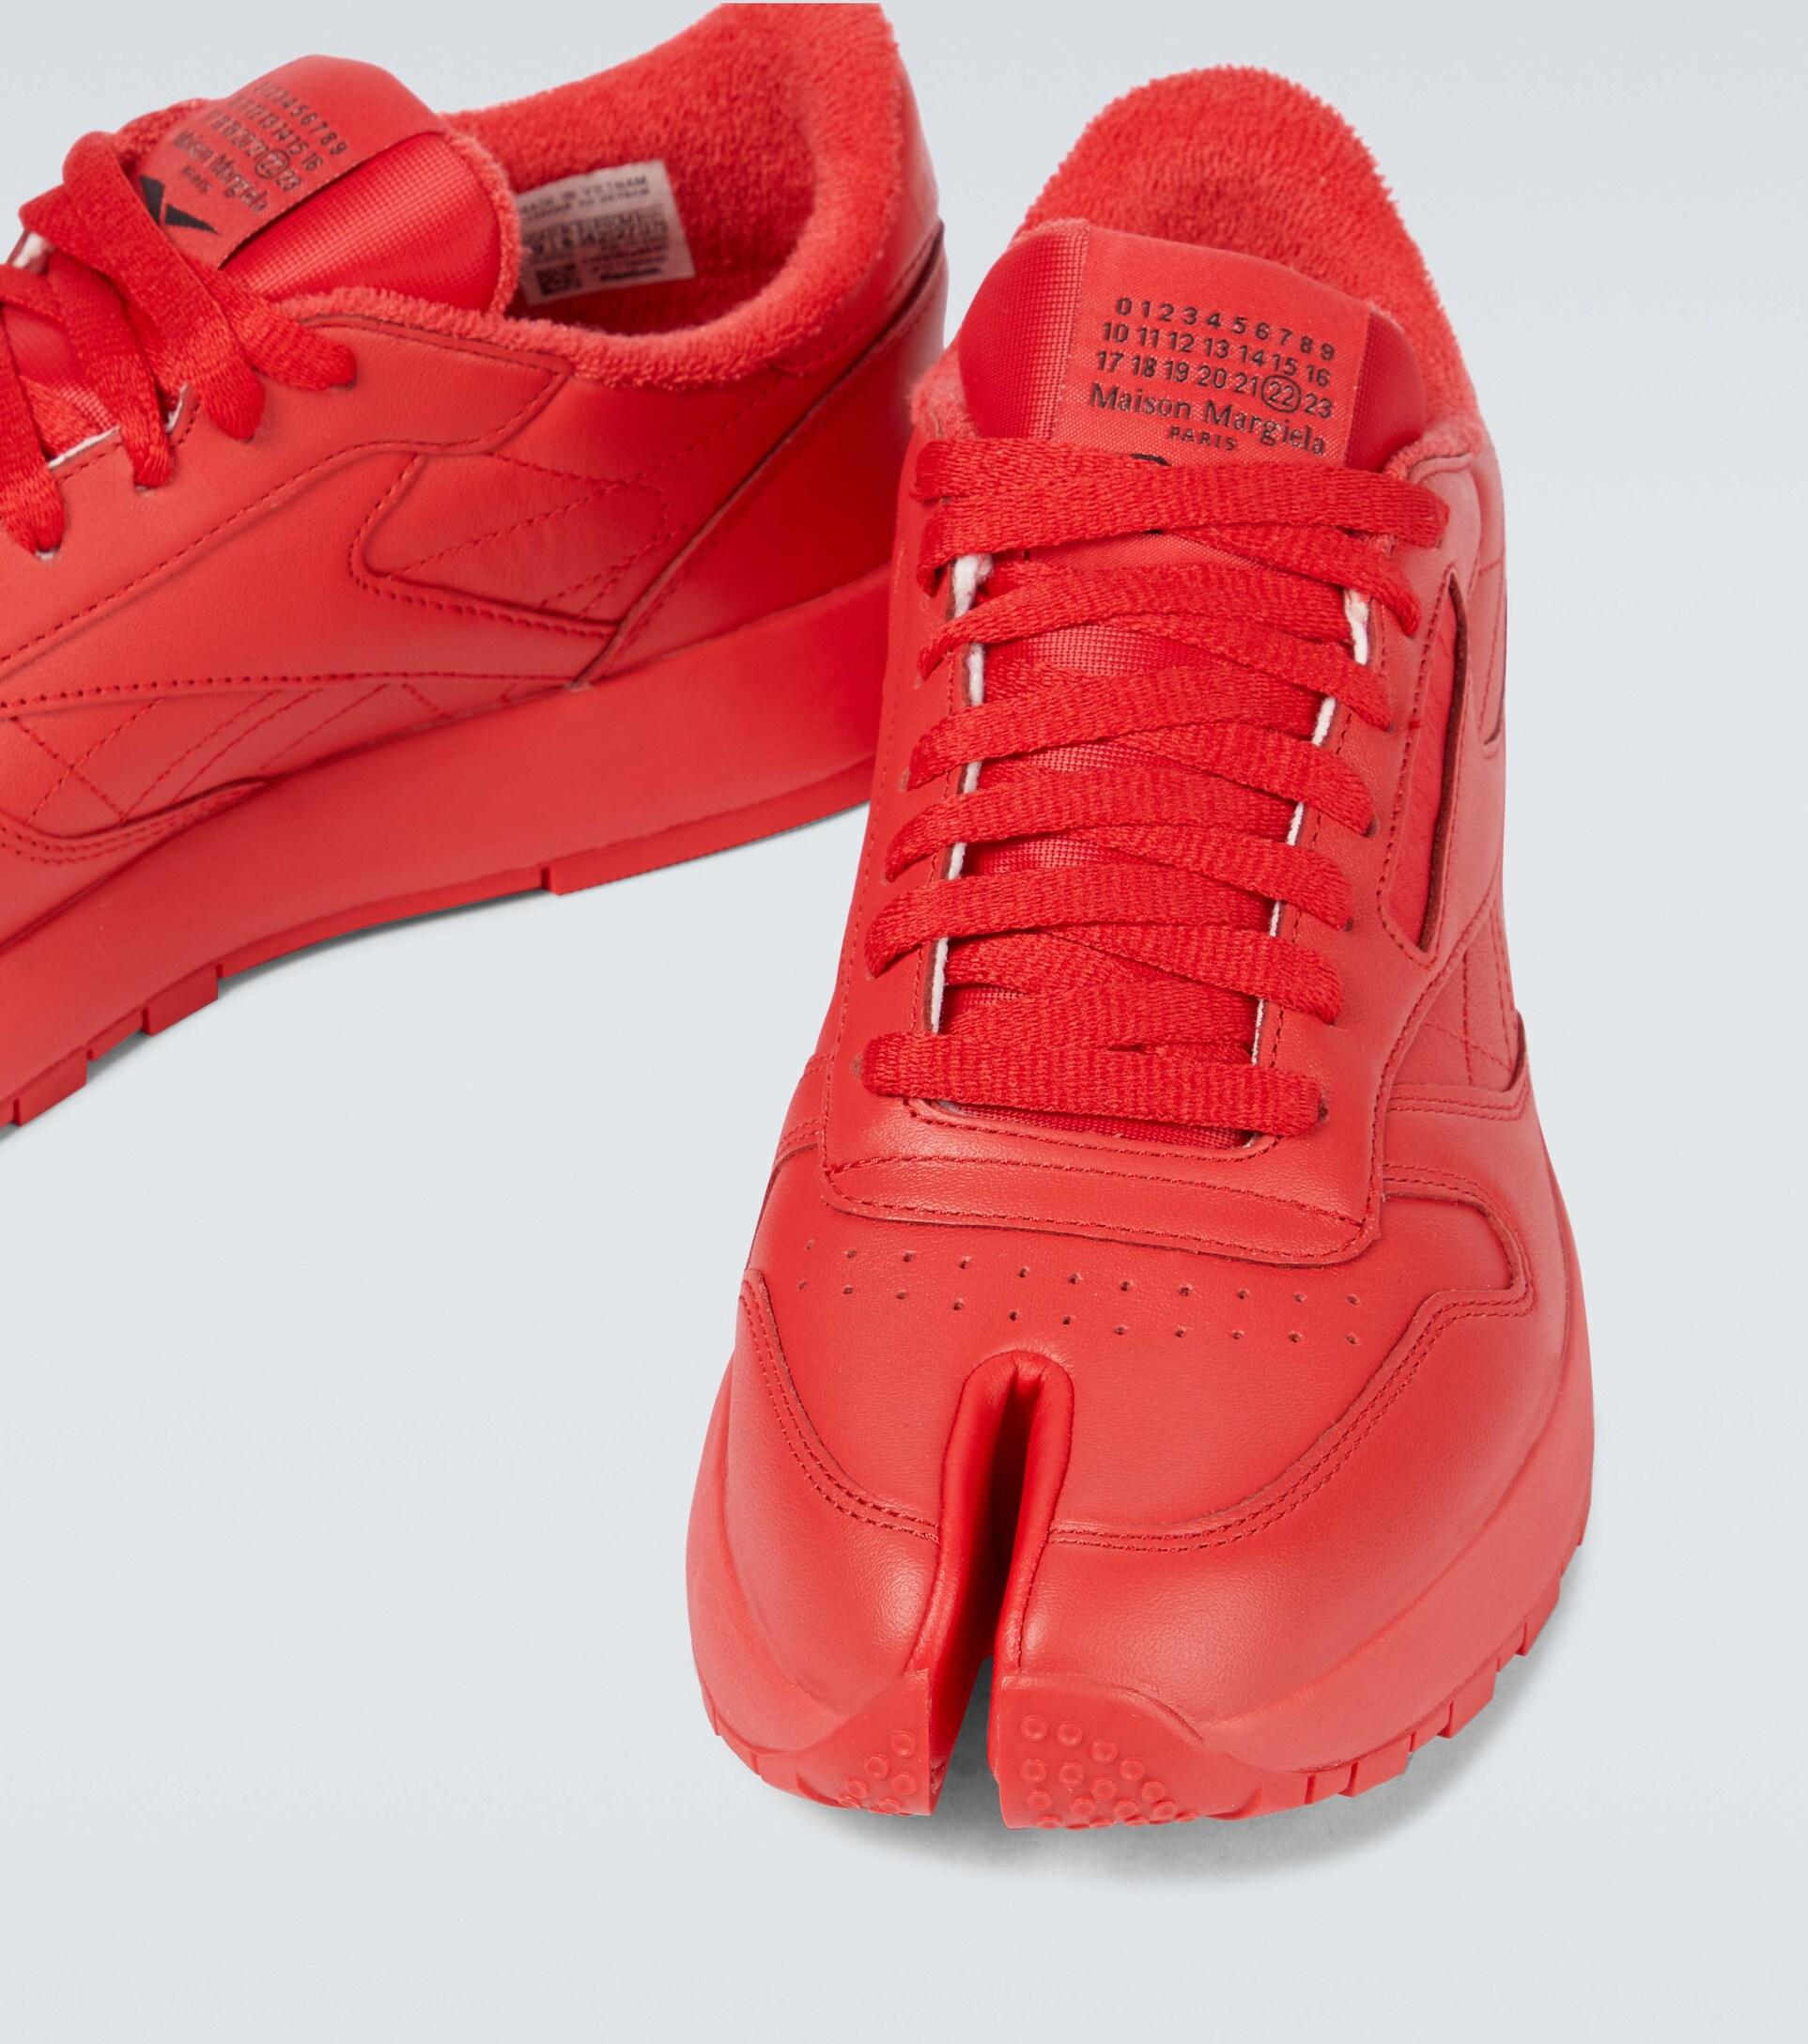 Maison Margiela X Reebok Project 0 Classic Leather Tabi Sneakers